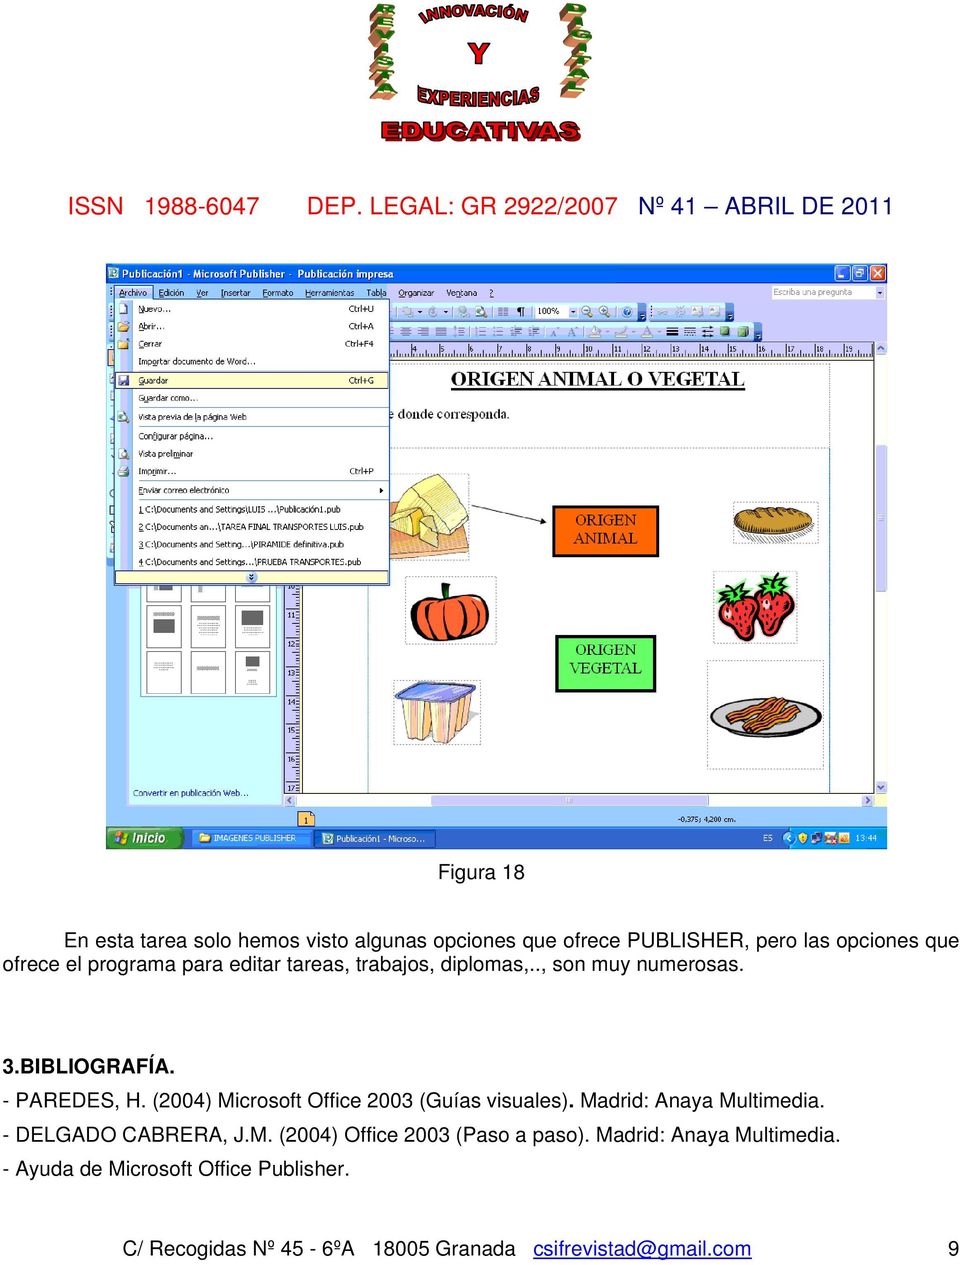 - PAREDES, H. (2004) Microsoft Office 2003 (Guías visuales). Madrid: Anaya Multimedia.